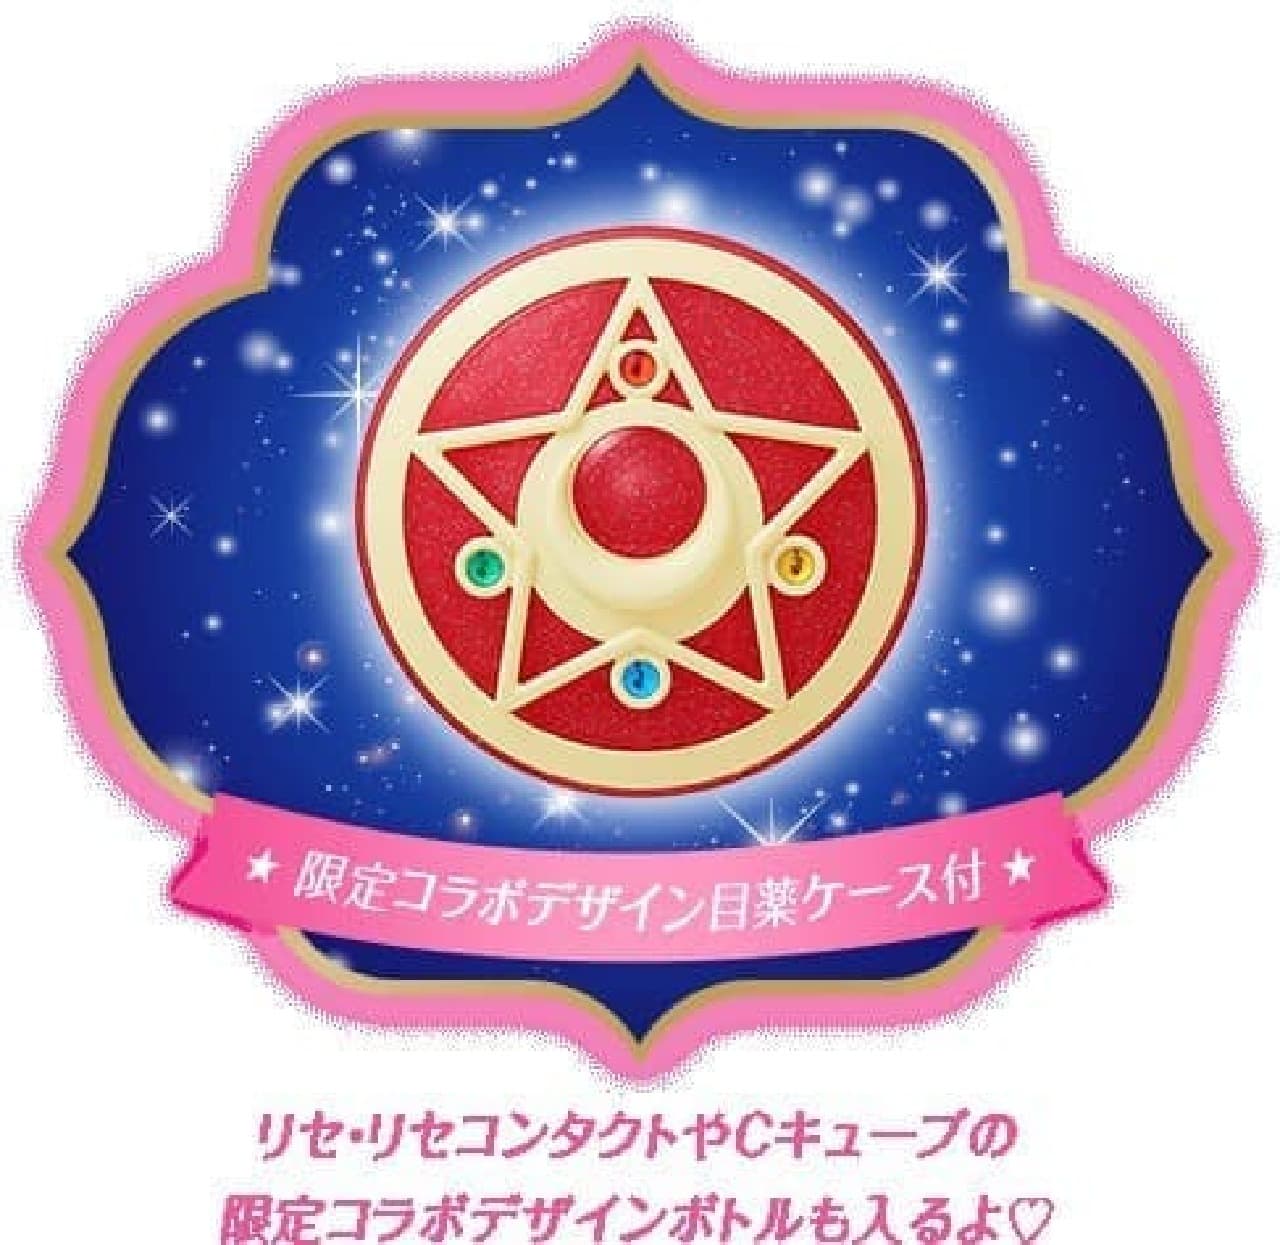 Rotrice Sailor Moon collaboration